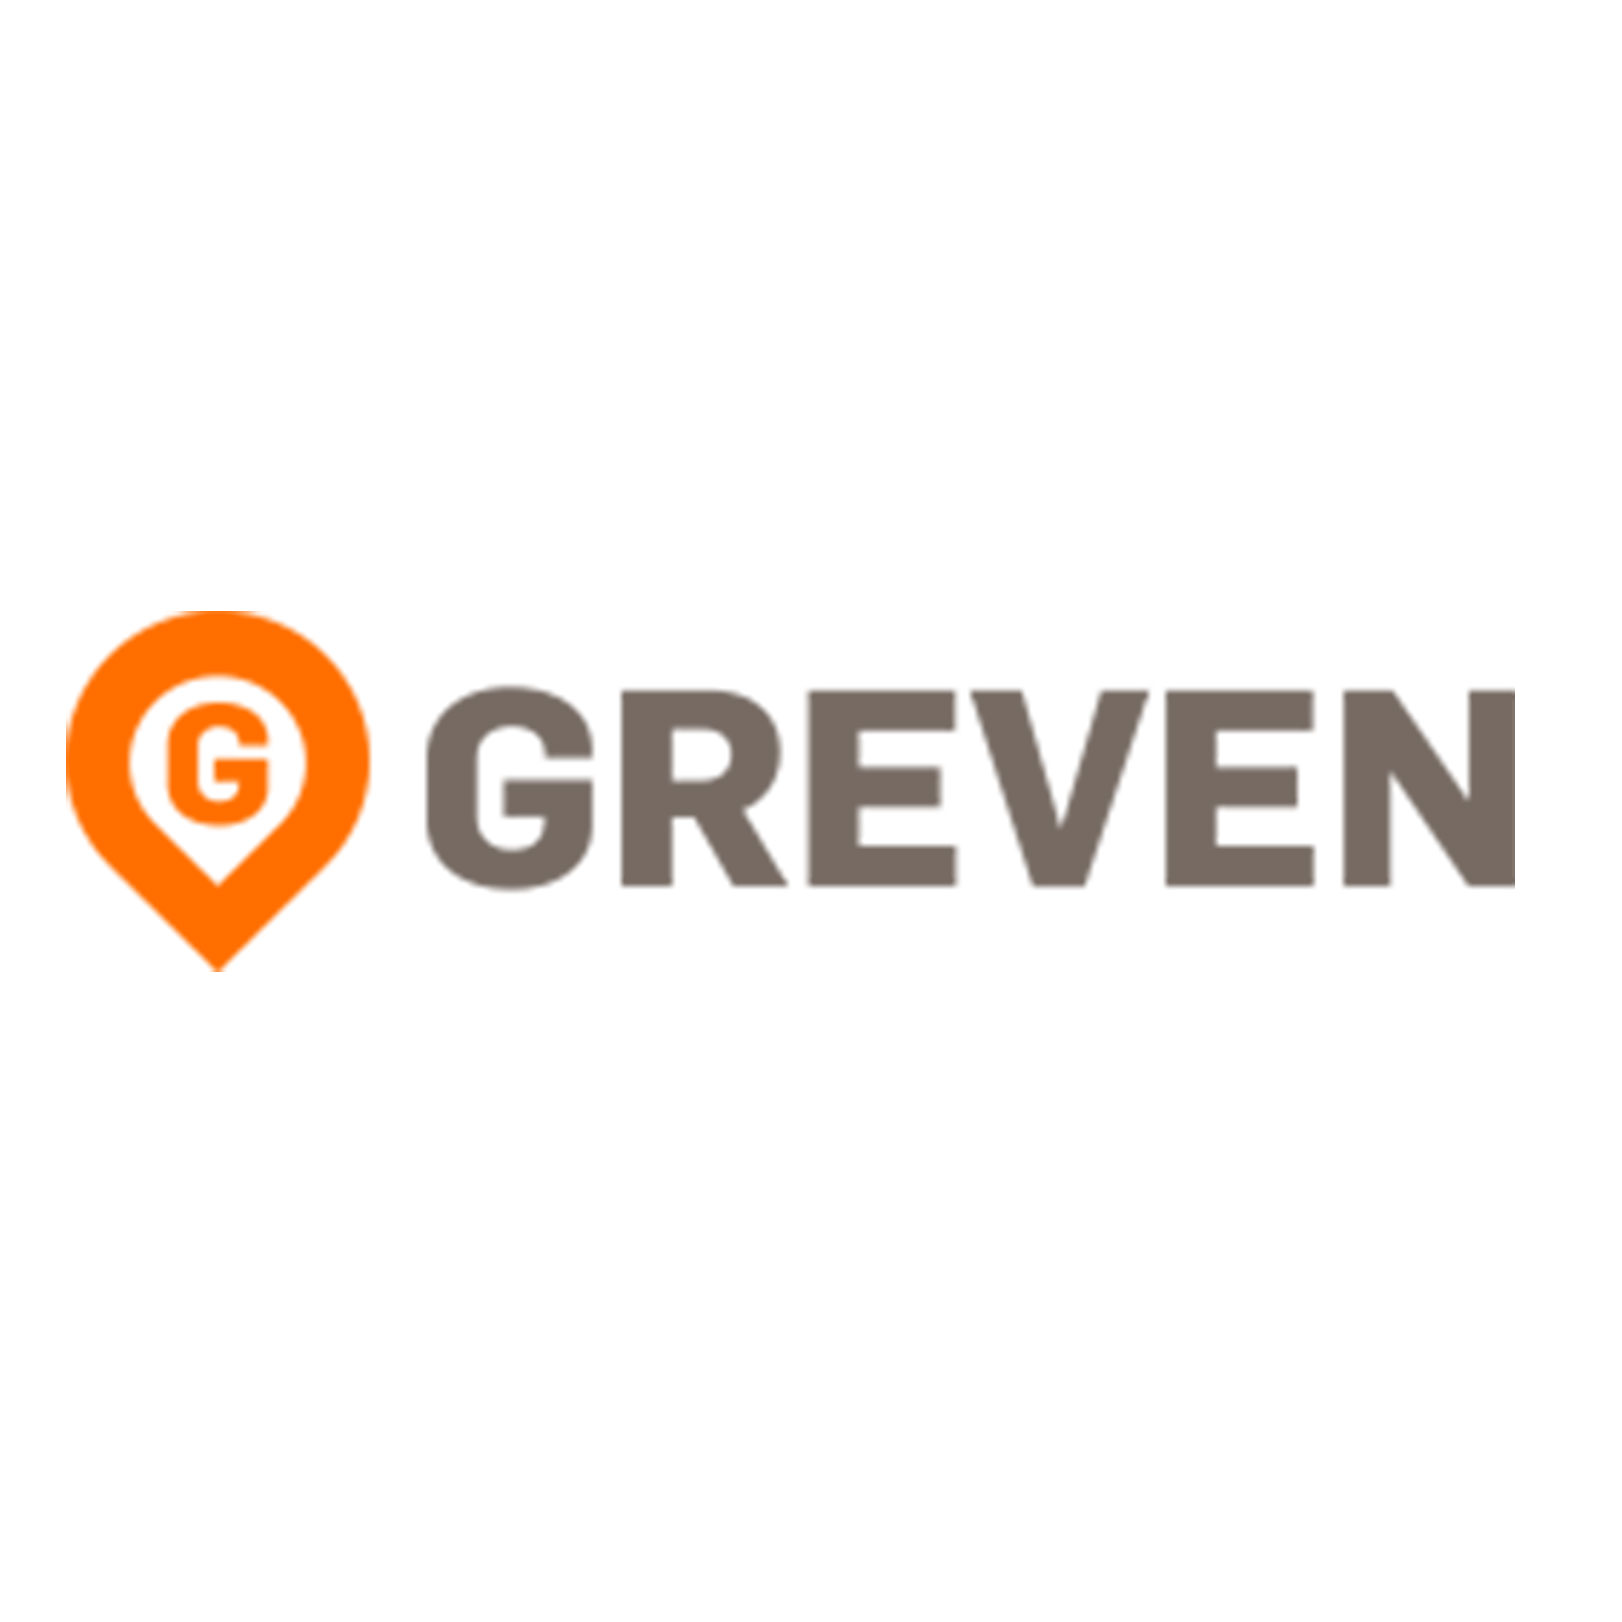 Greven Medien GmbH & Co. KG